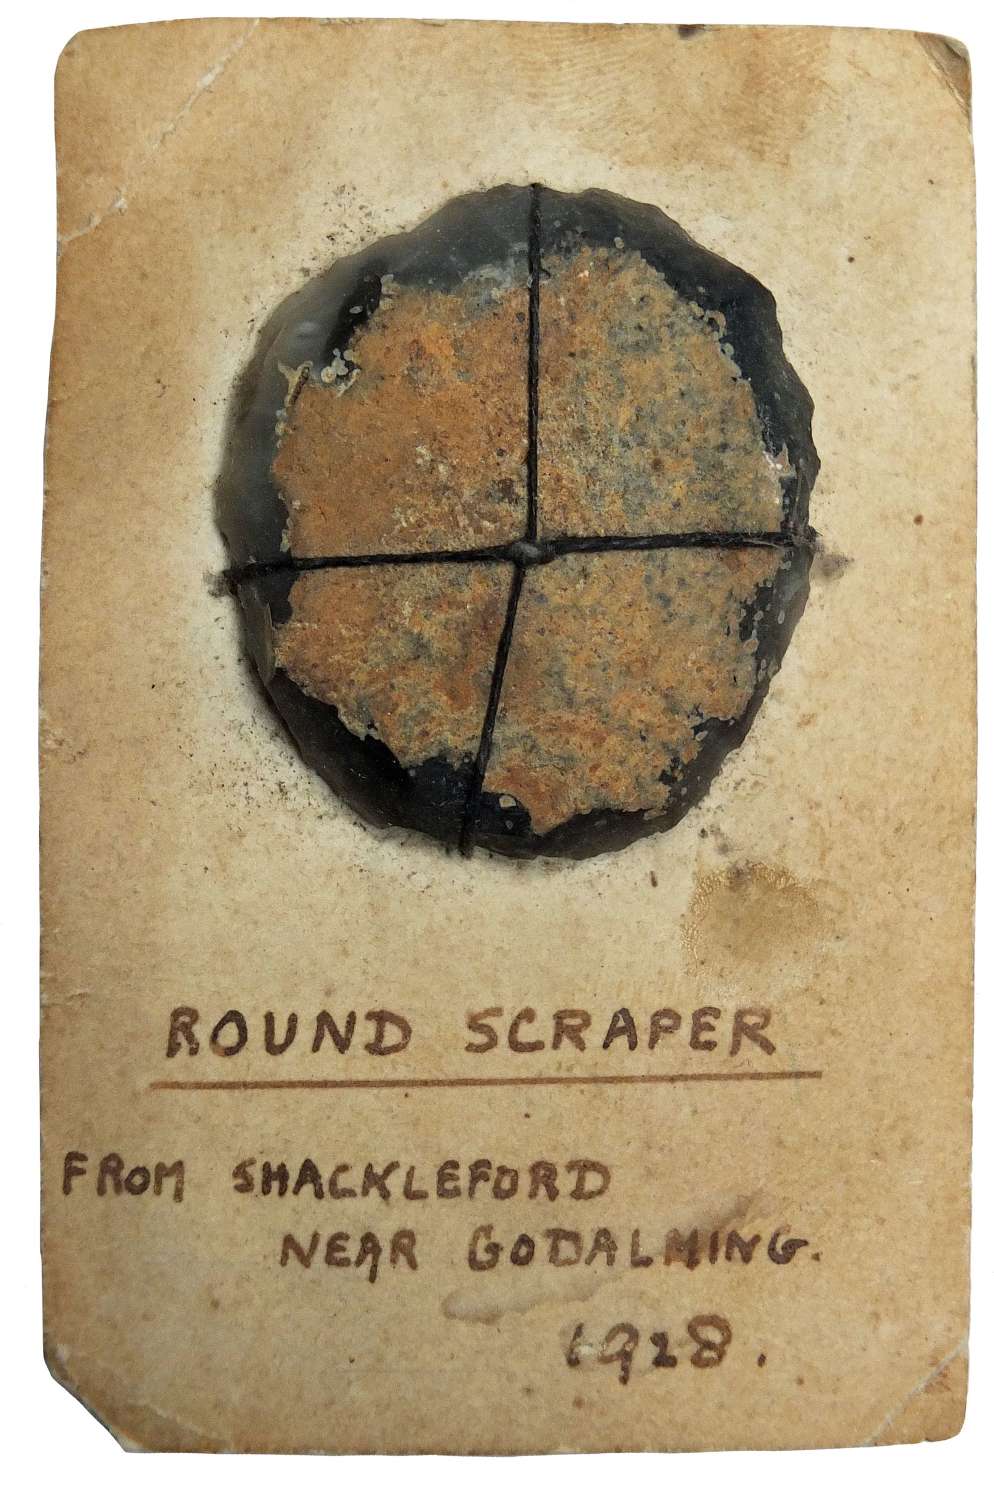 A Neolithic flint scraper found at Shackleford, near Godalming, Surrey